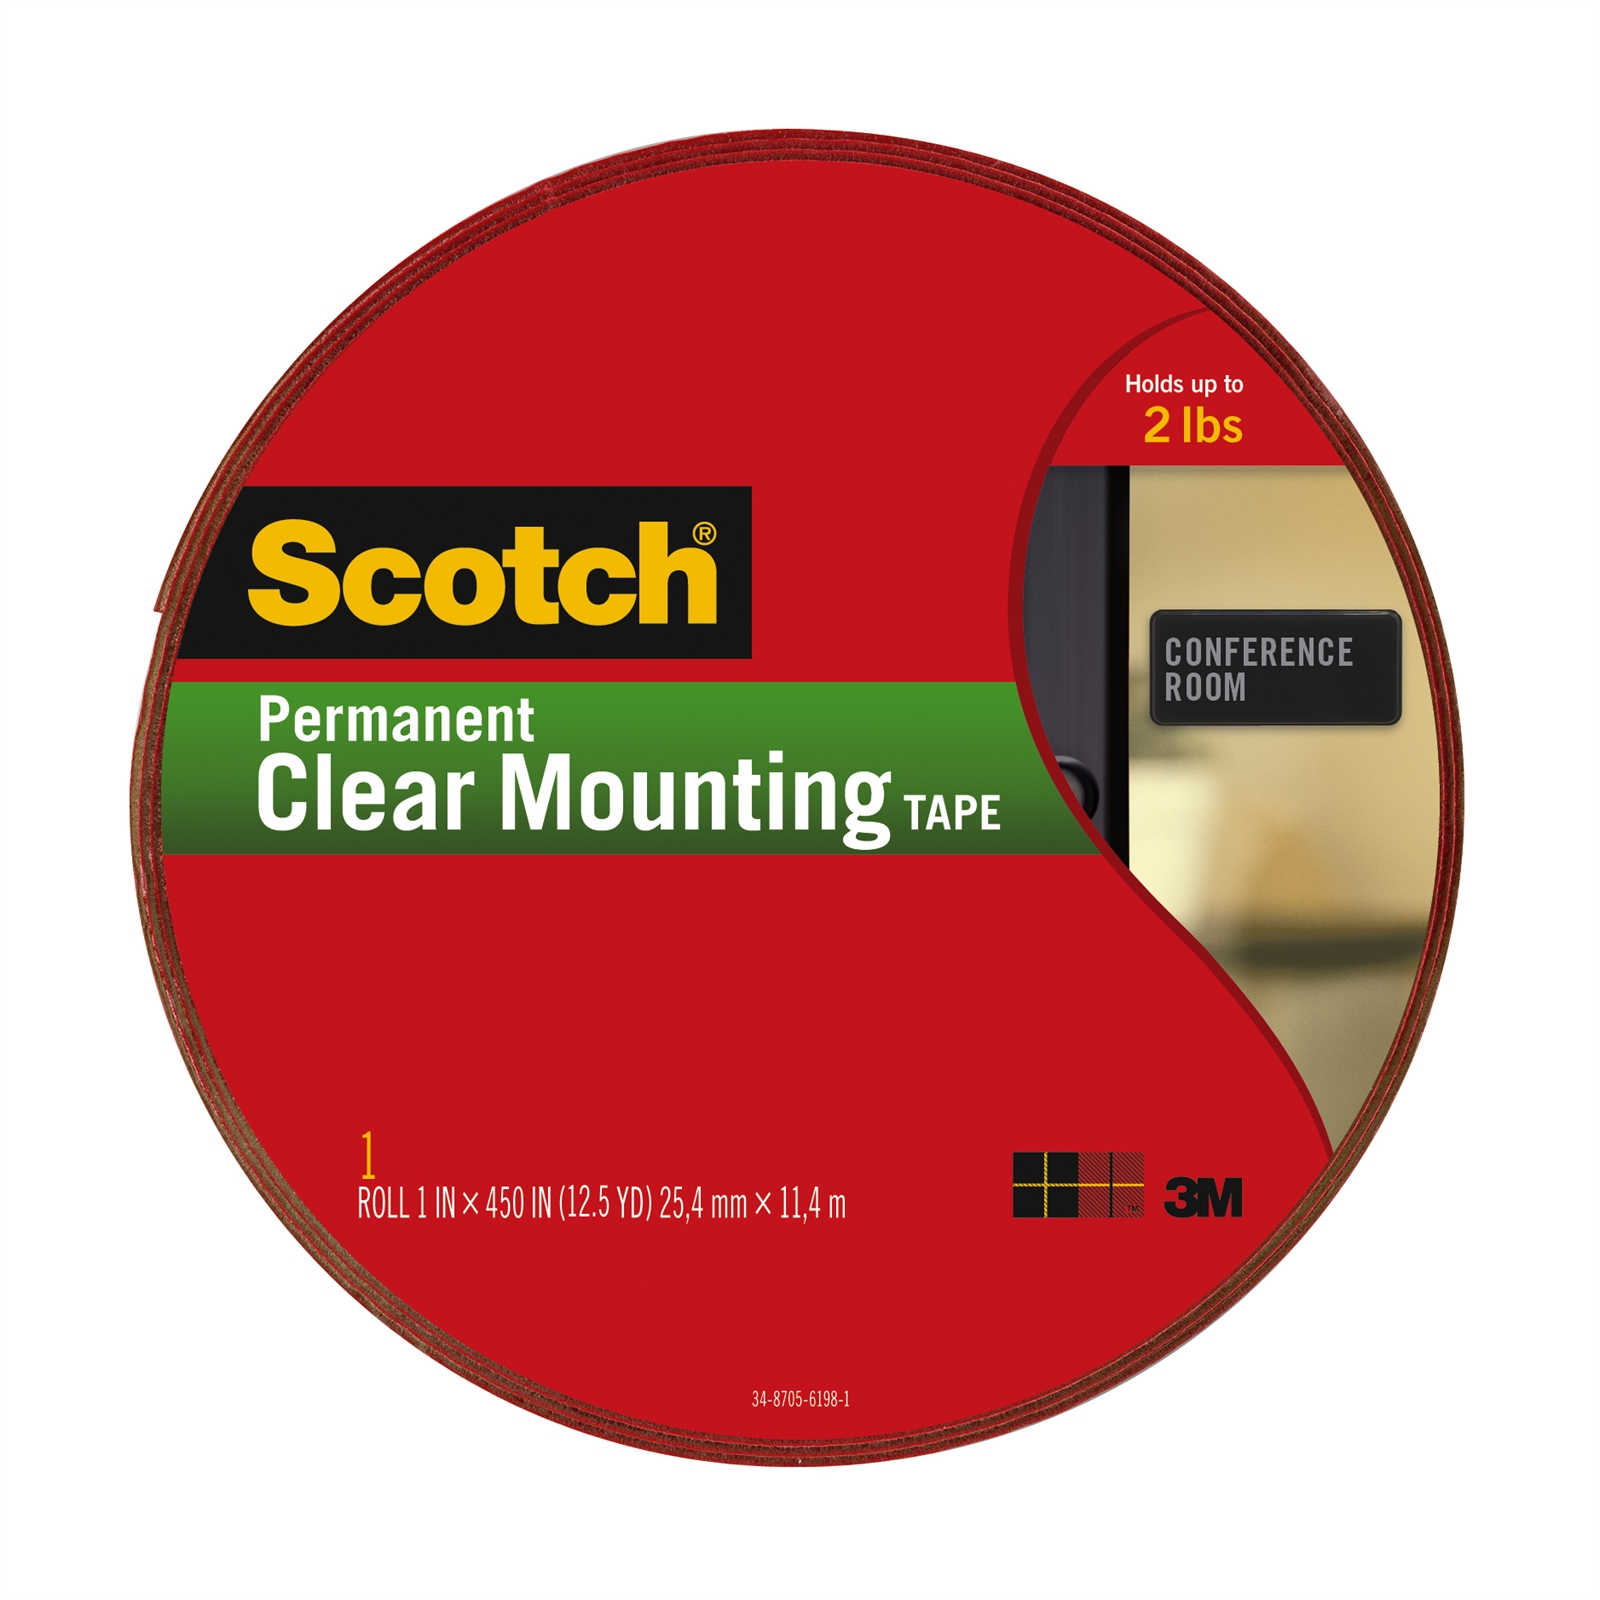 Scotch 2.5cm x 11.4m Clear Mounting Tape